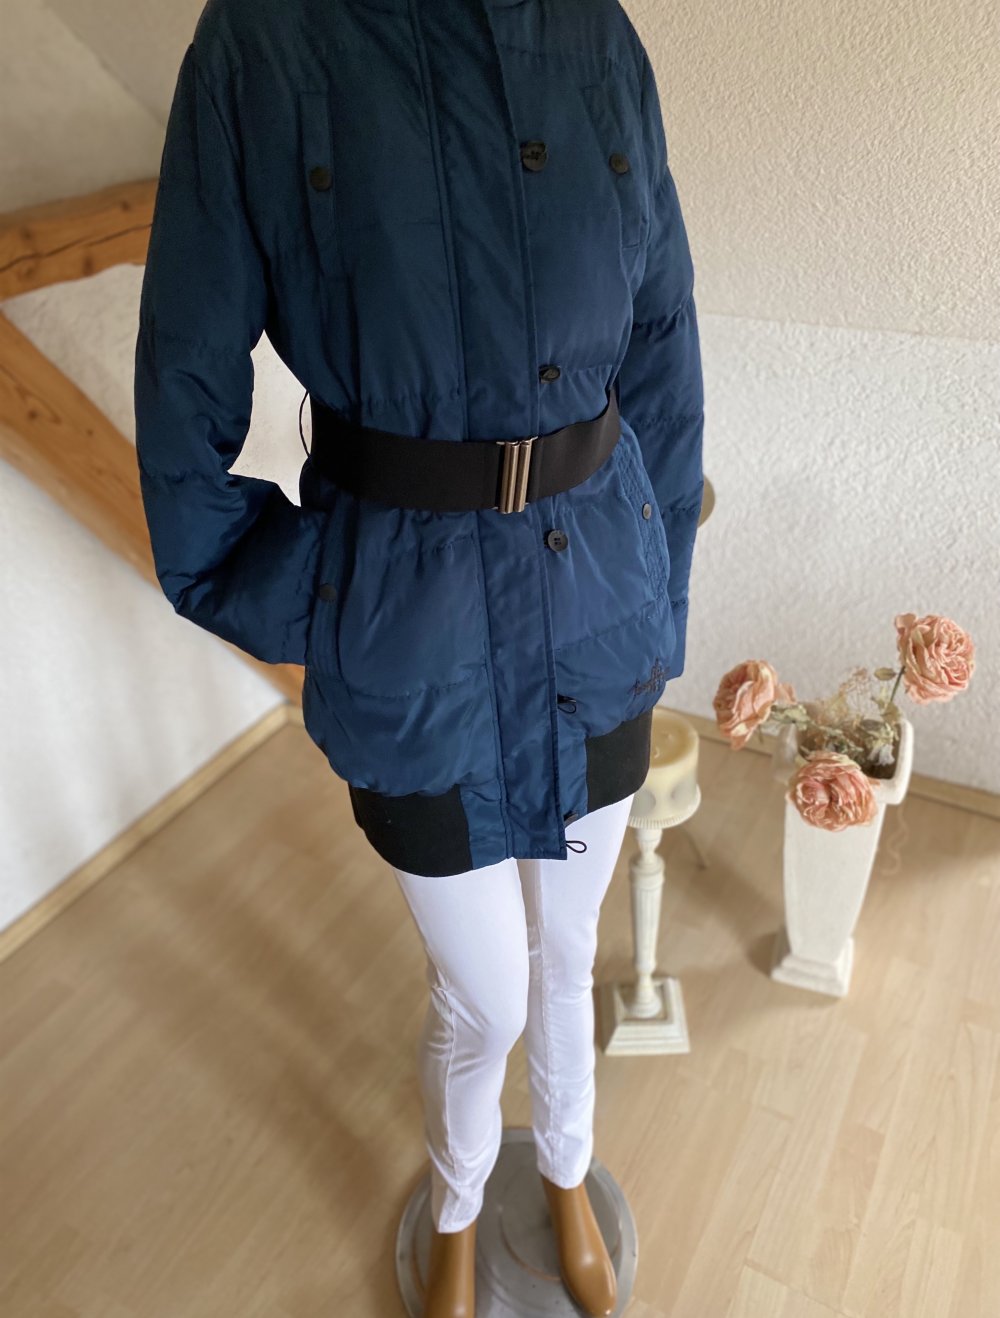 Tumble n dry - Warme Winterjacke Mädchen 170/176 Marke Tumblendry sehr  hoher Neupreis top ! :: Kleiderkorb.ch